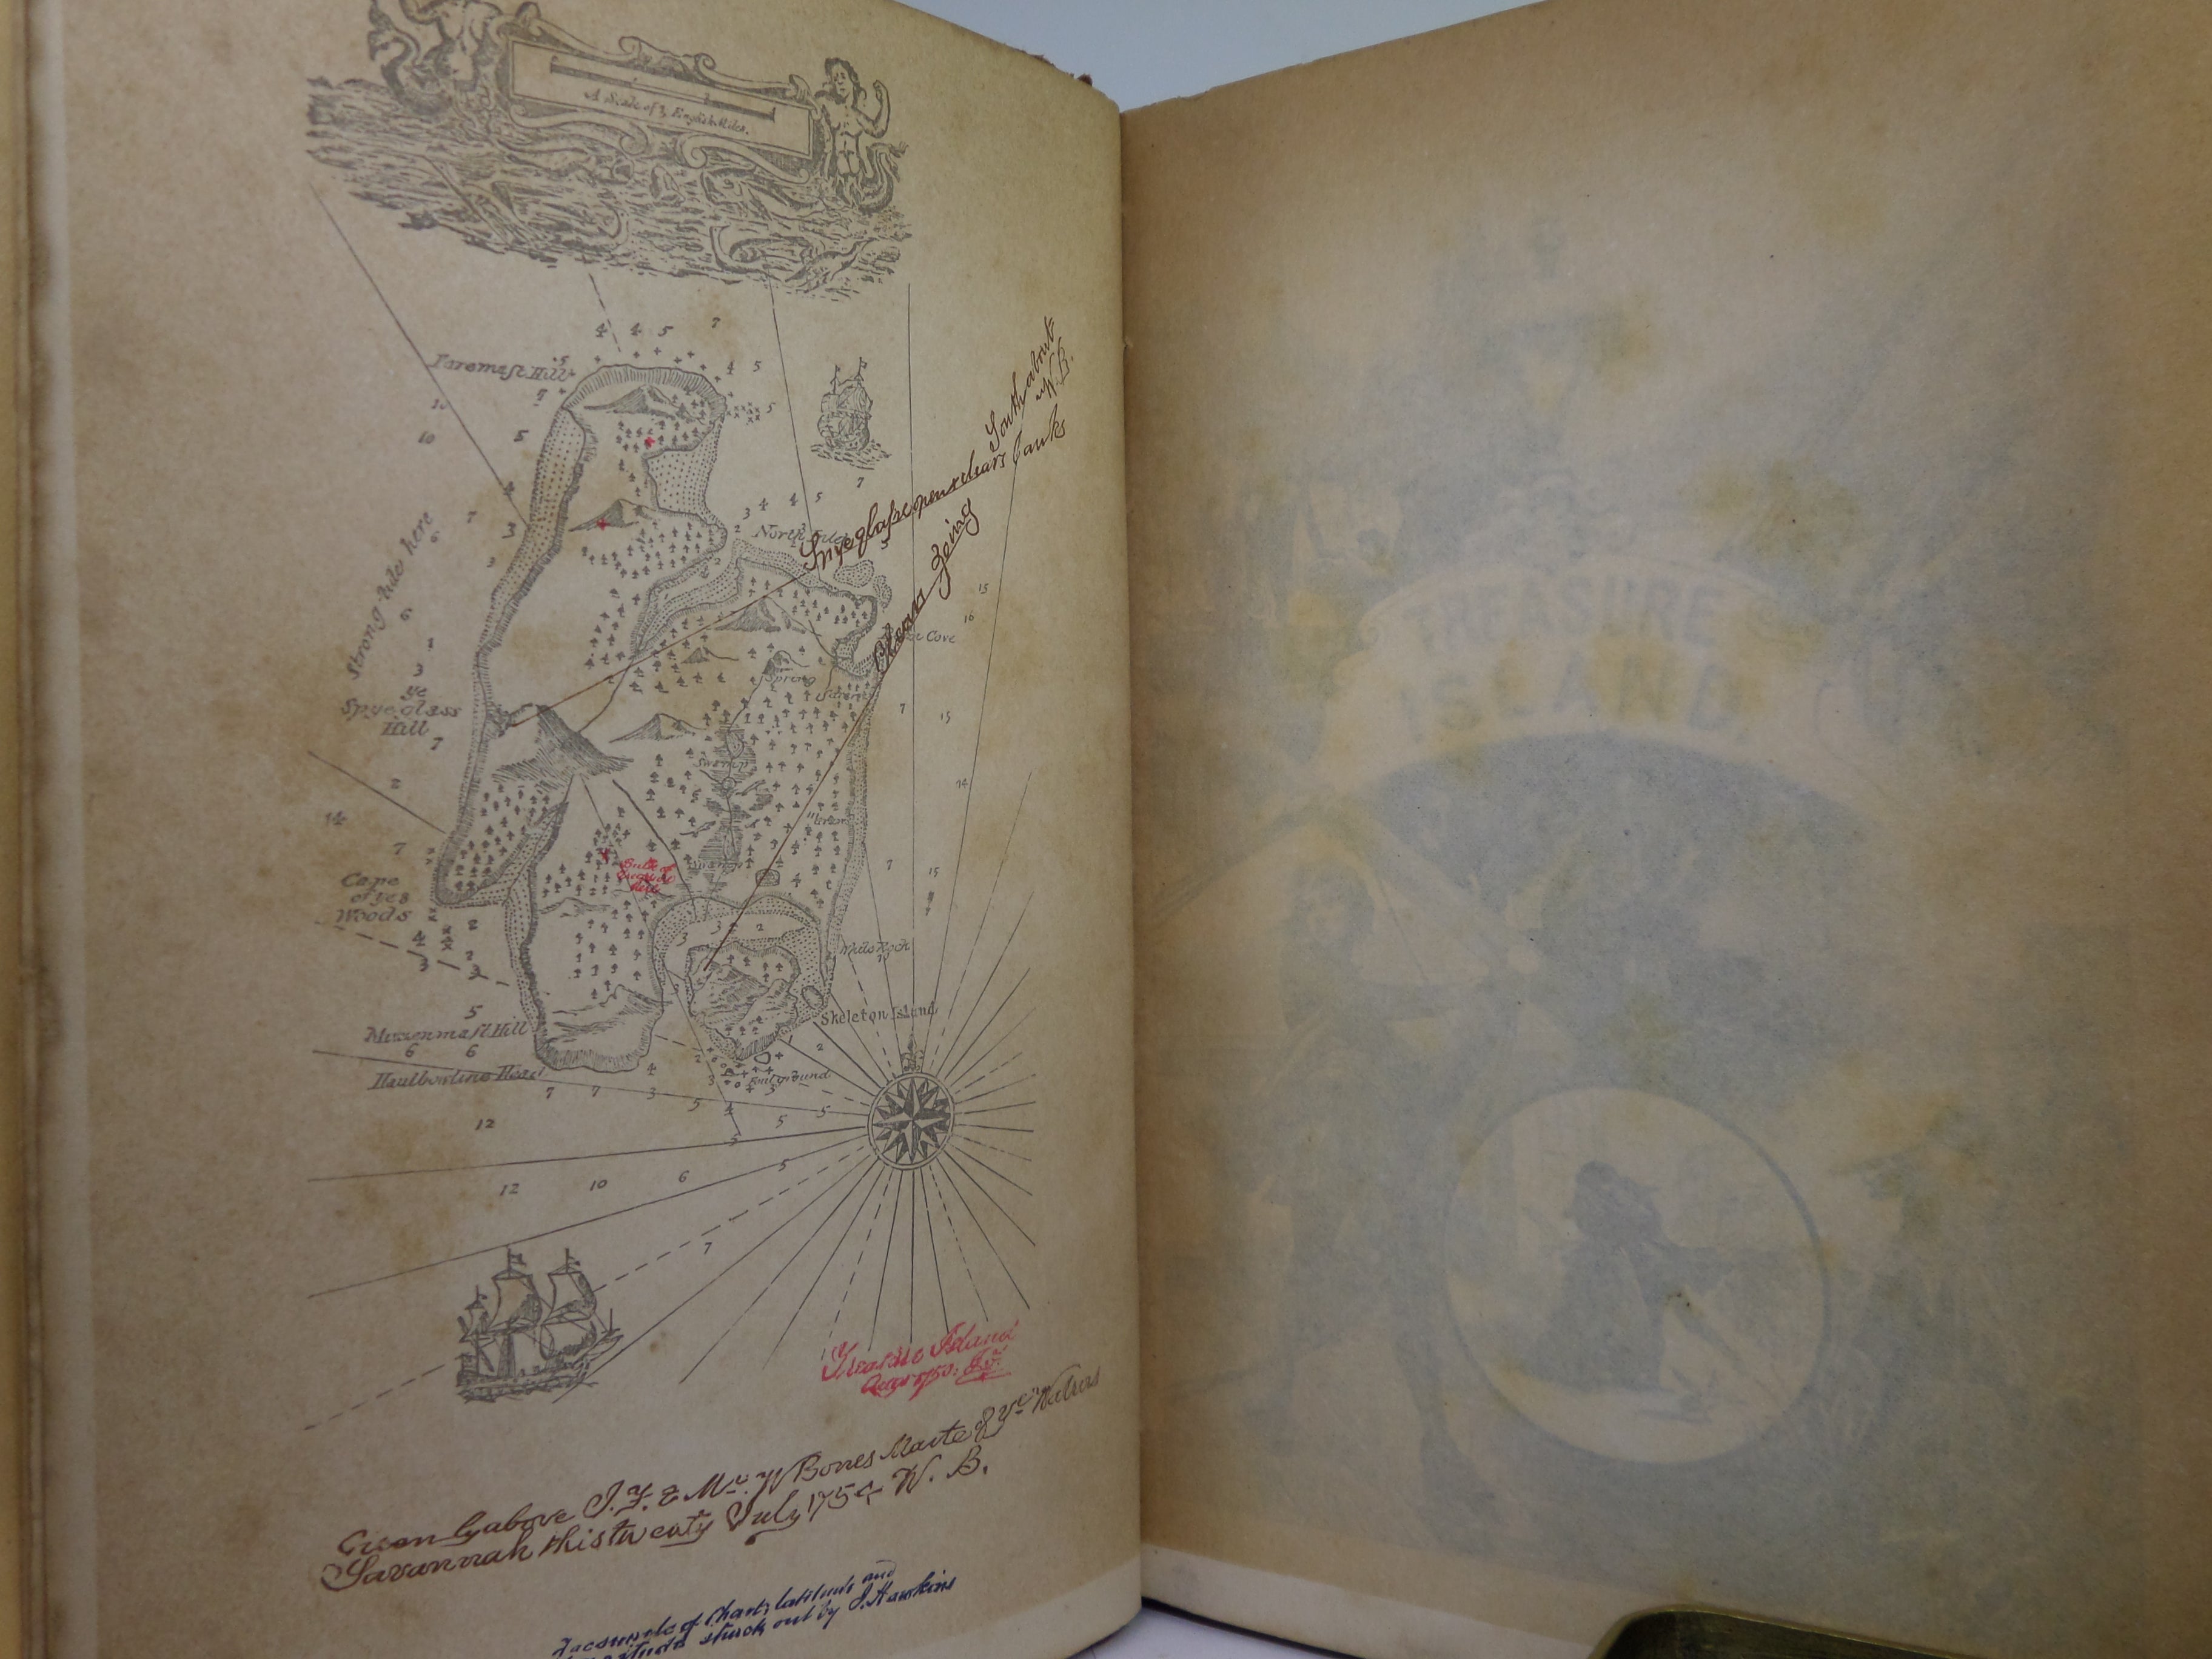 TREASURE ISLAND BY ROBERT LOUIS STEVENSON 1885 FIRST ILLUSTRATED EDITION